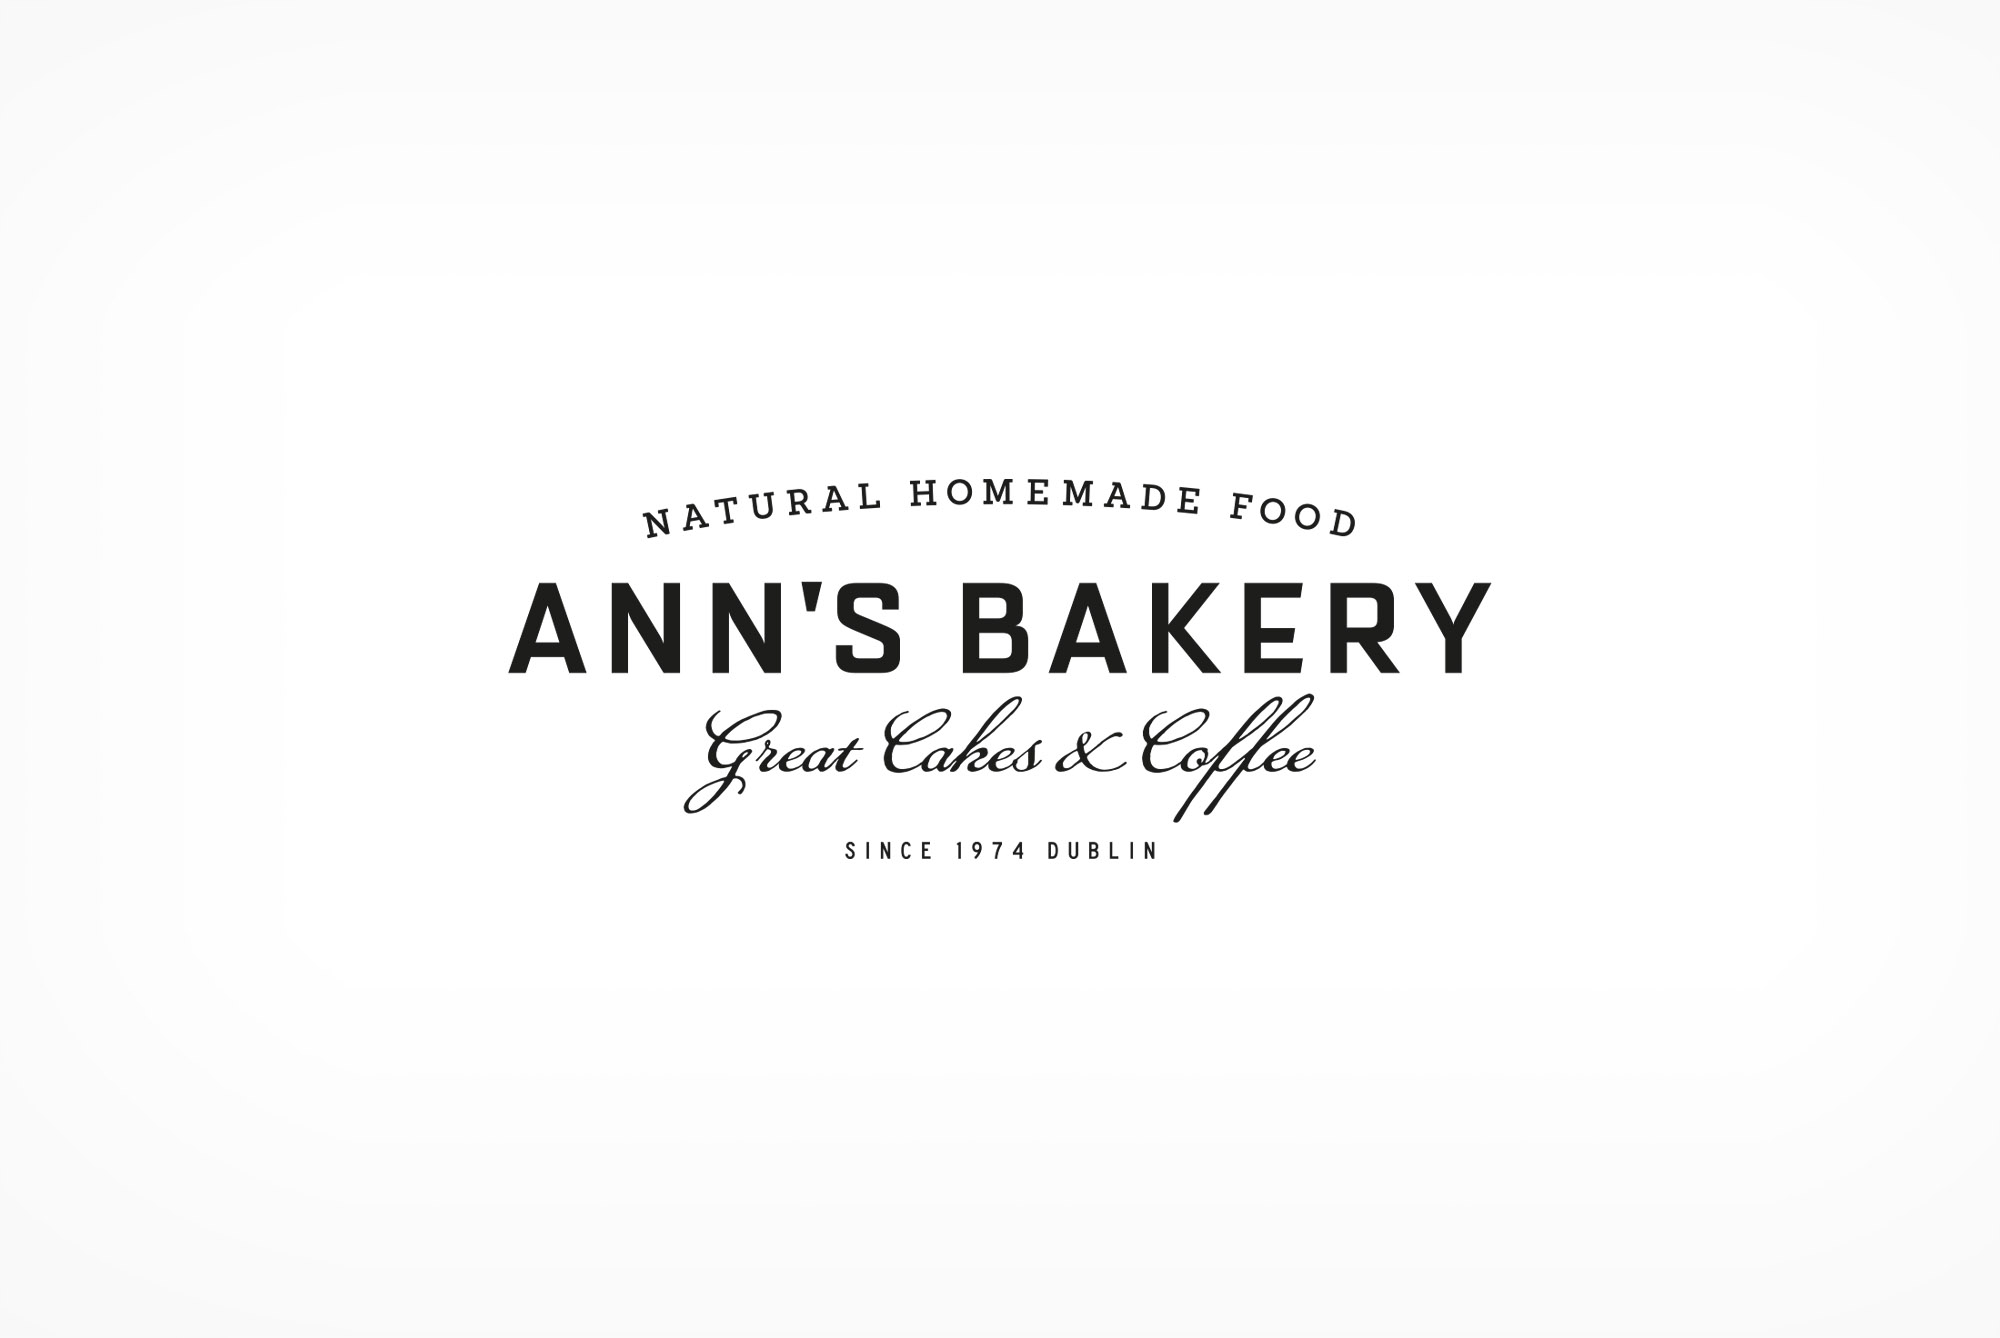 Ann's Bakery Great Cakes and Coffee Dublin brand logo.